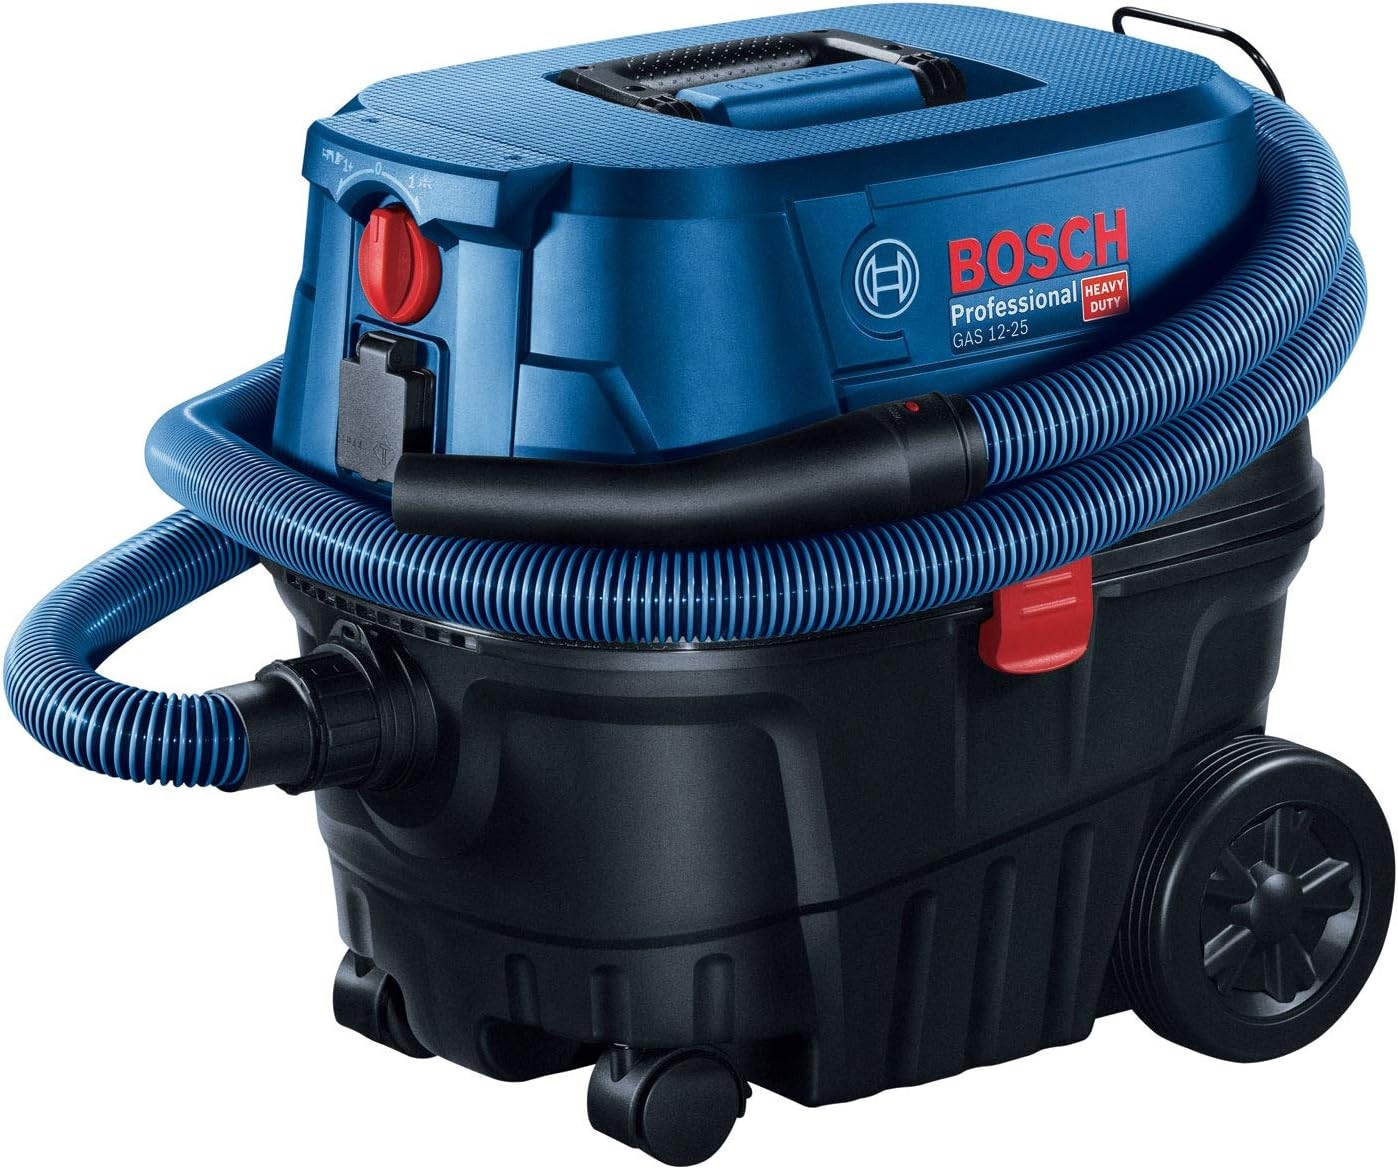 Bosch Professional Gas 12 25V